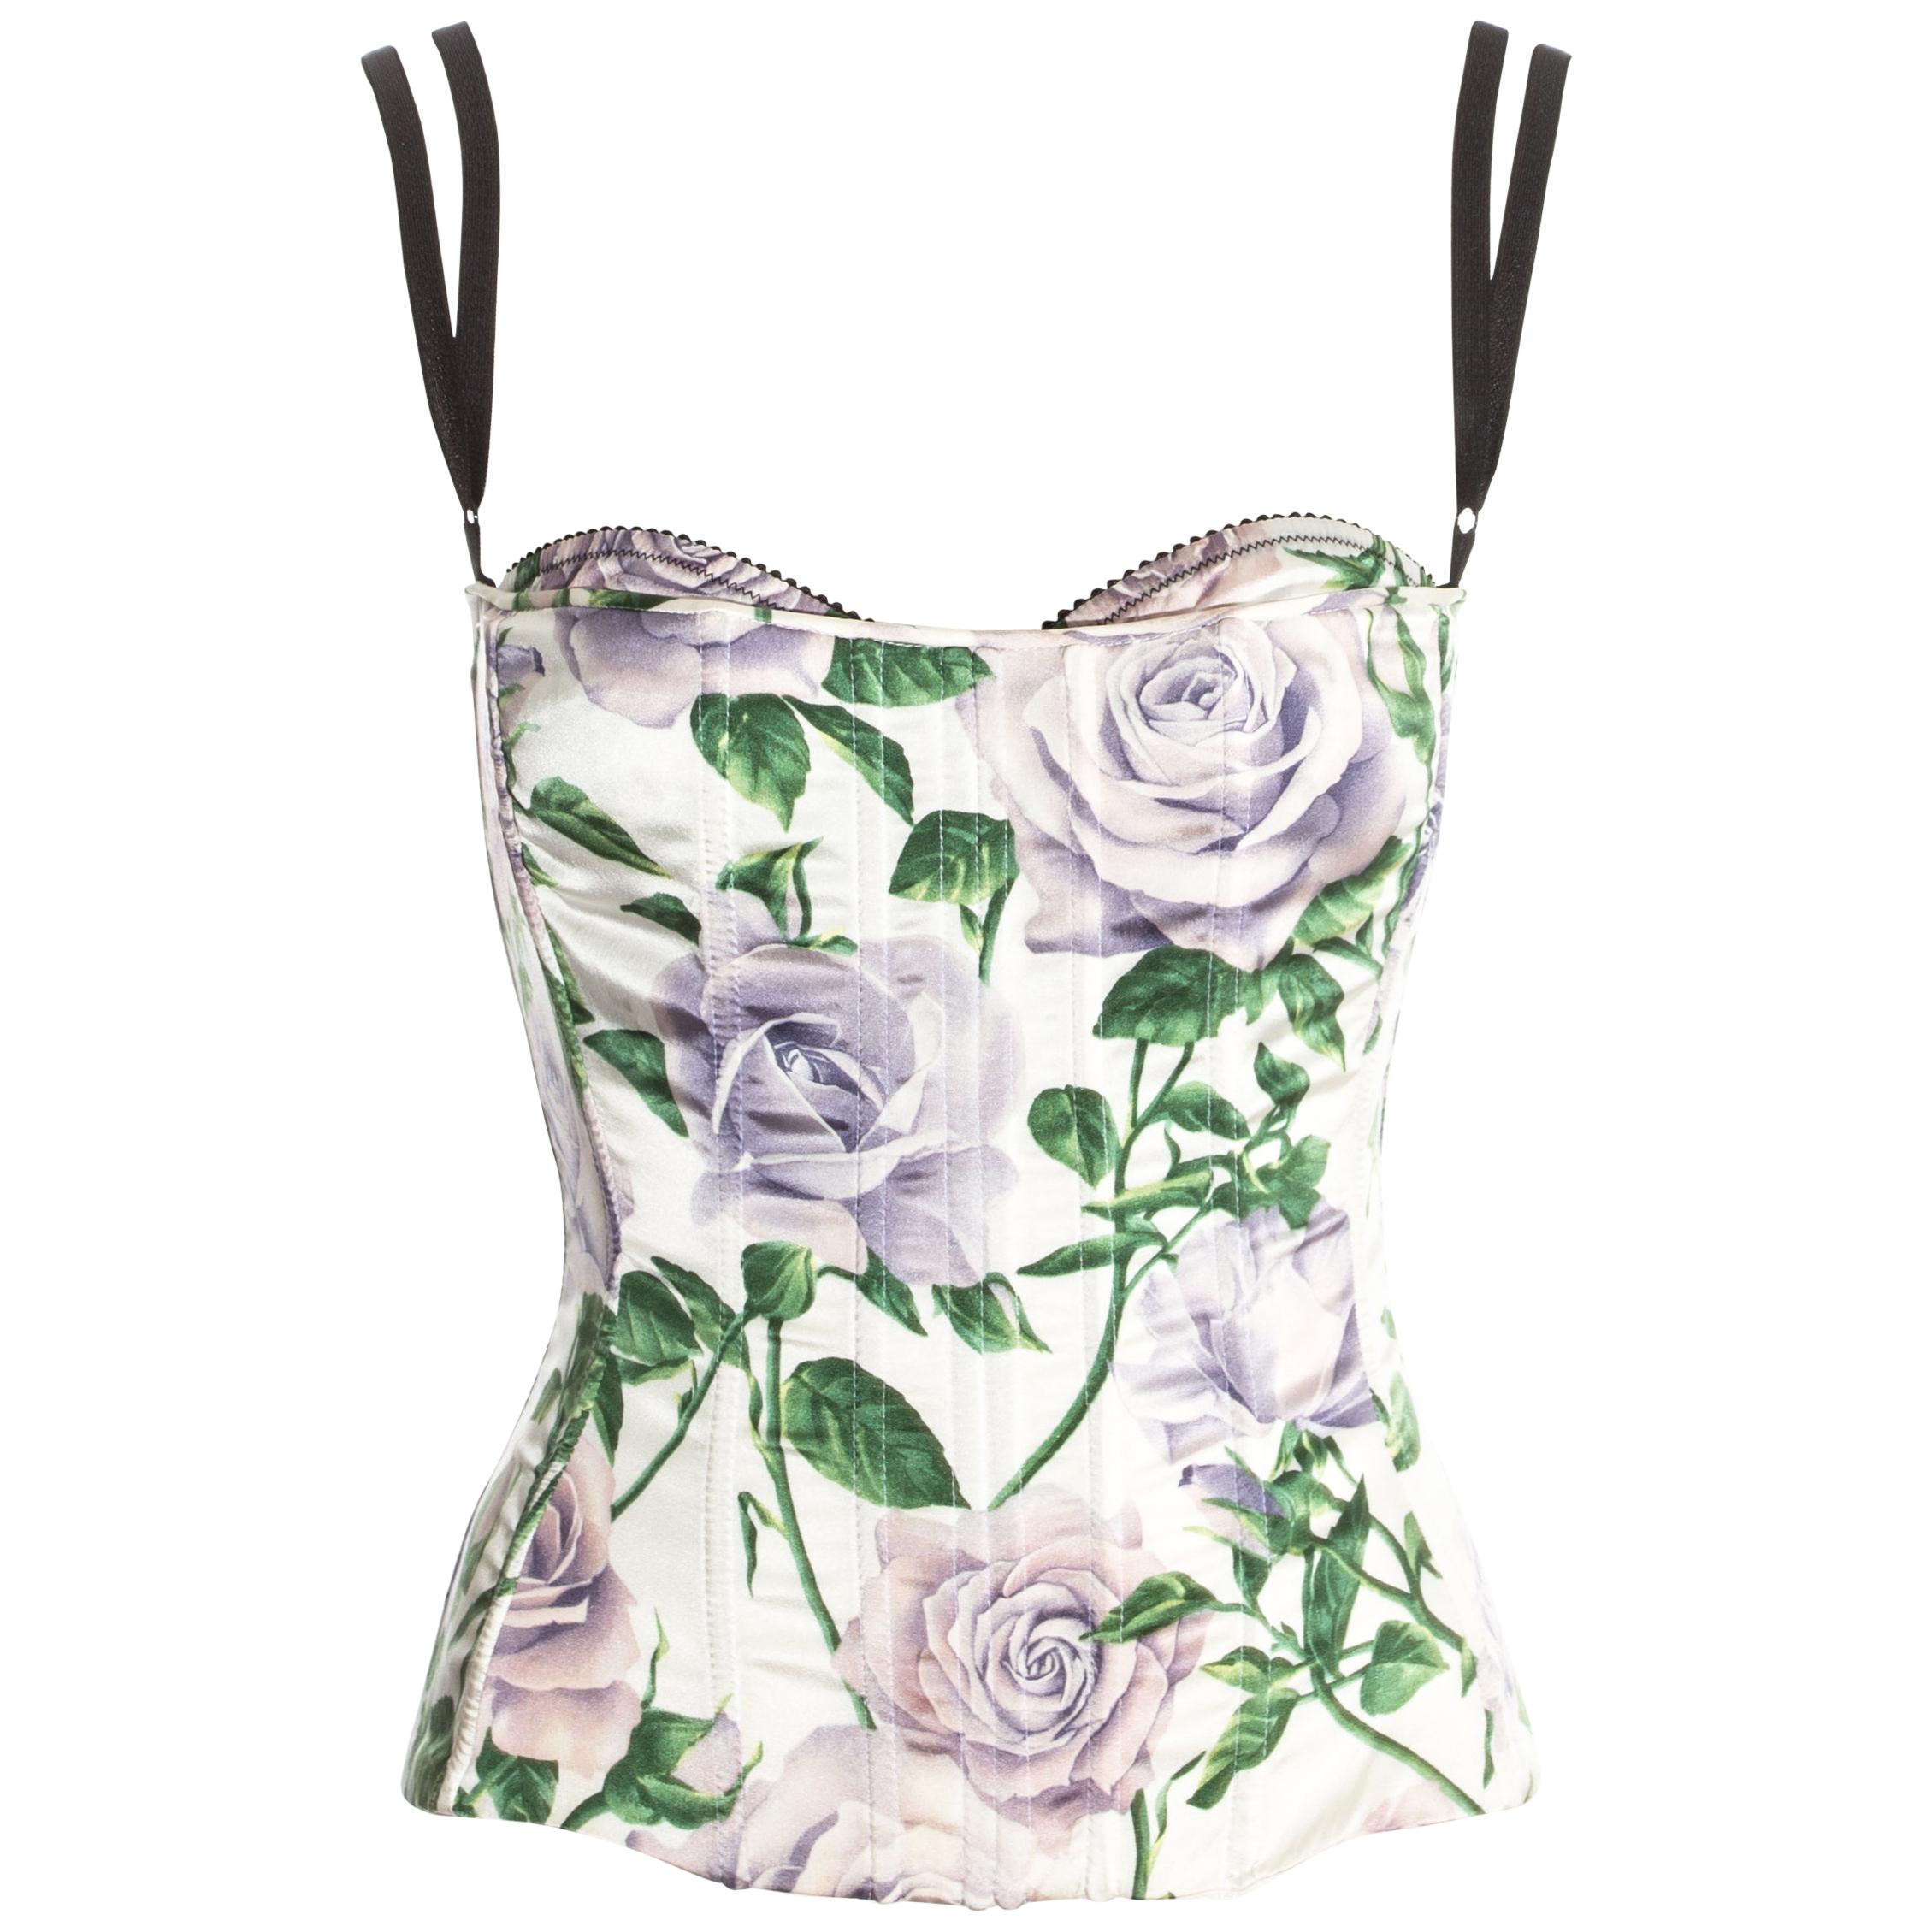 Dolce & Gabbana floral silk boned corset with bra, c. 1990s